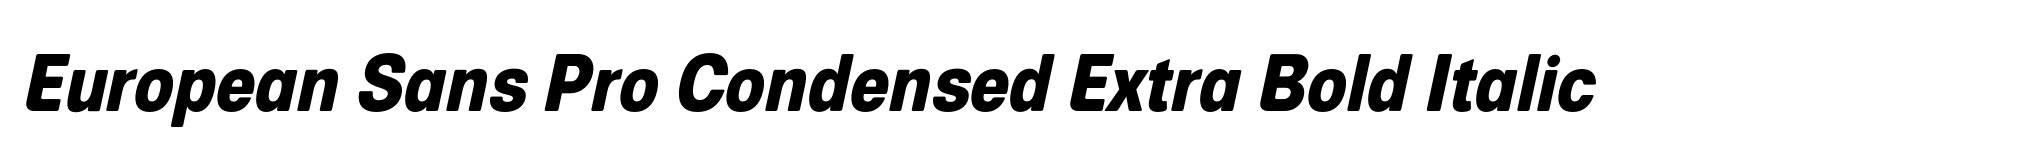 European Sans Pro Condensed Extra Bold Italic image